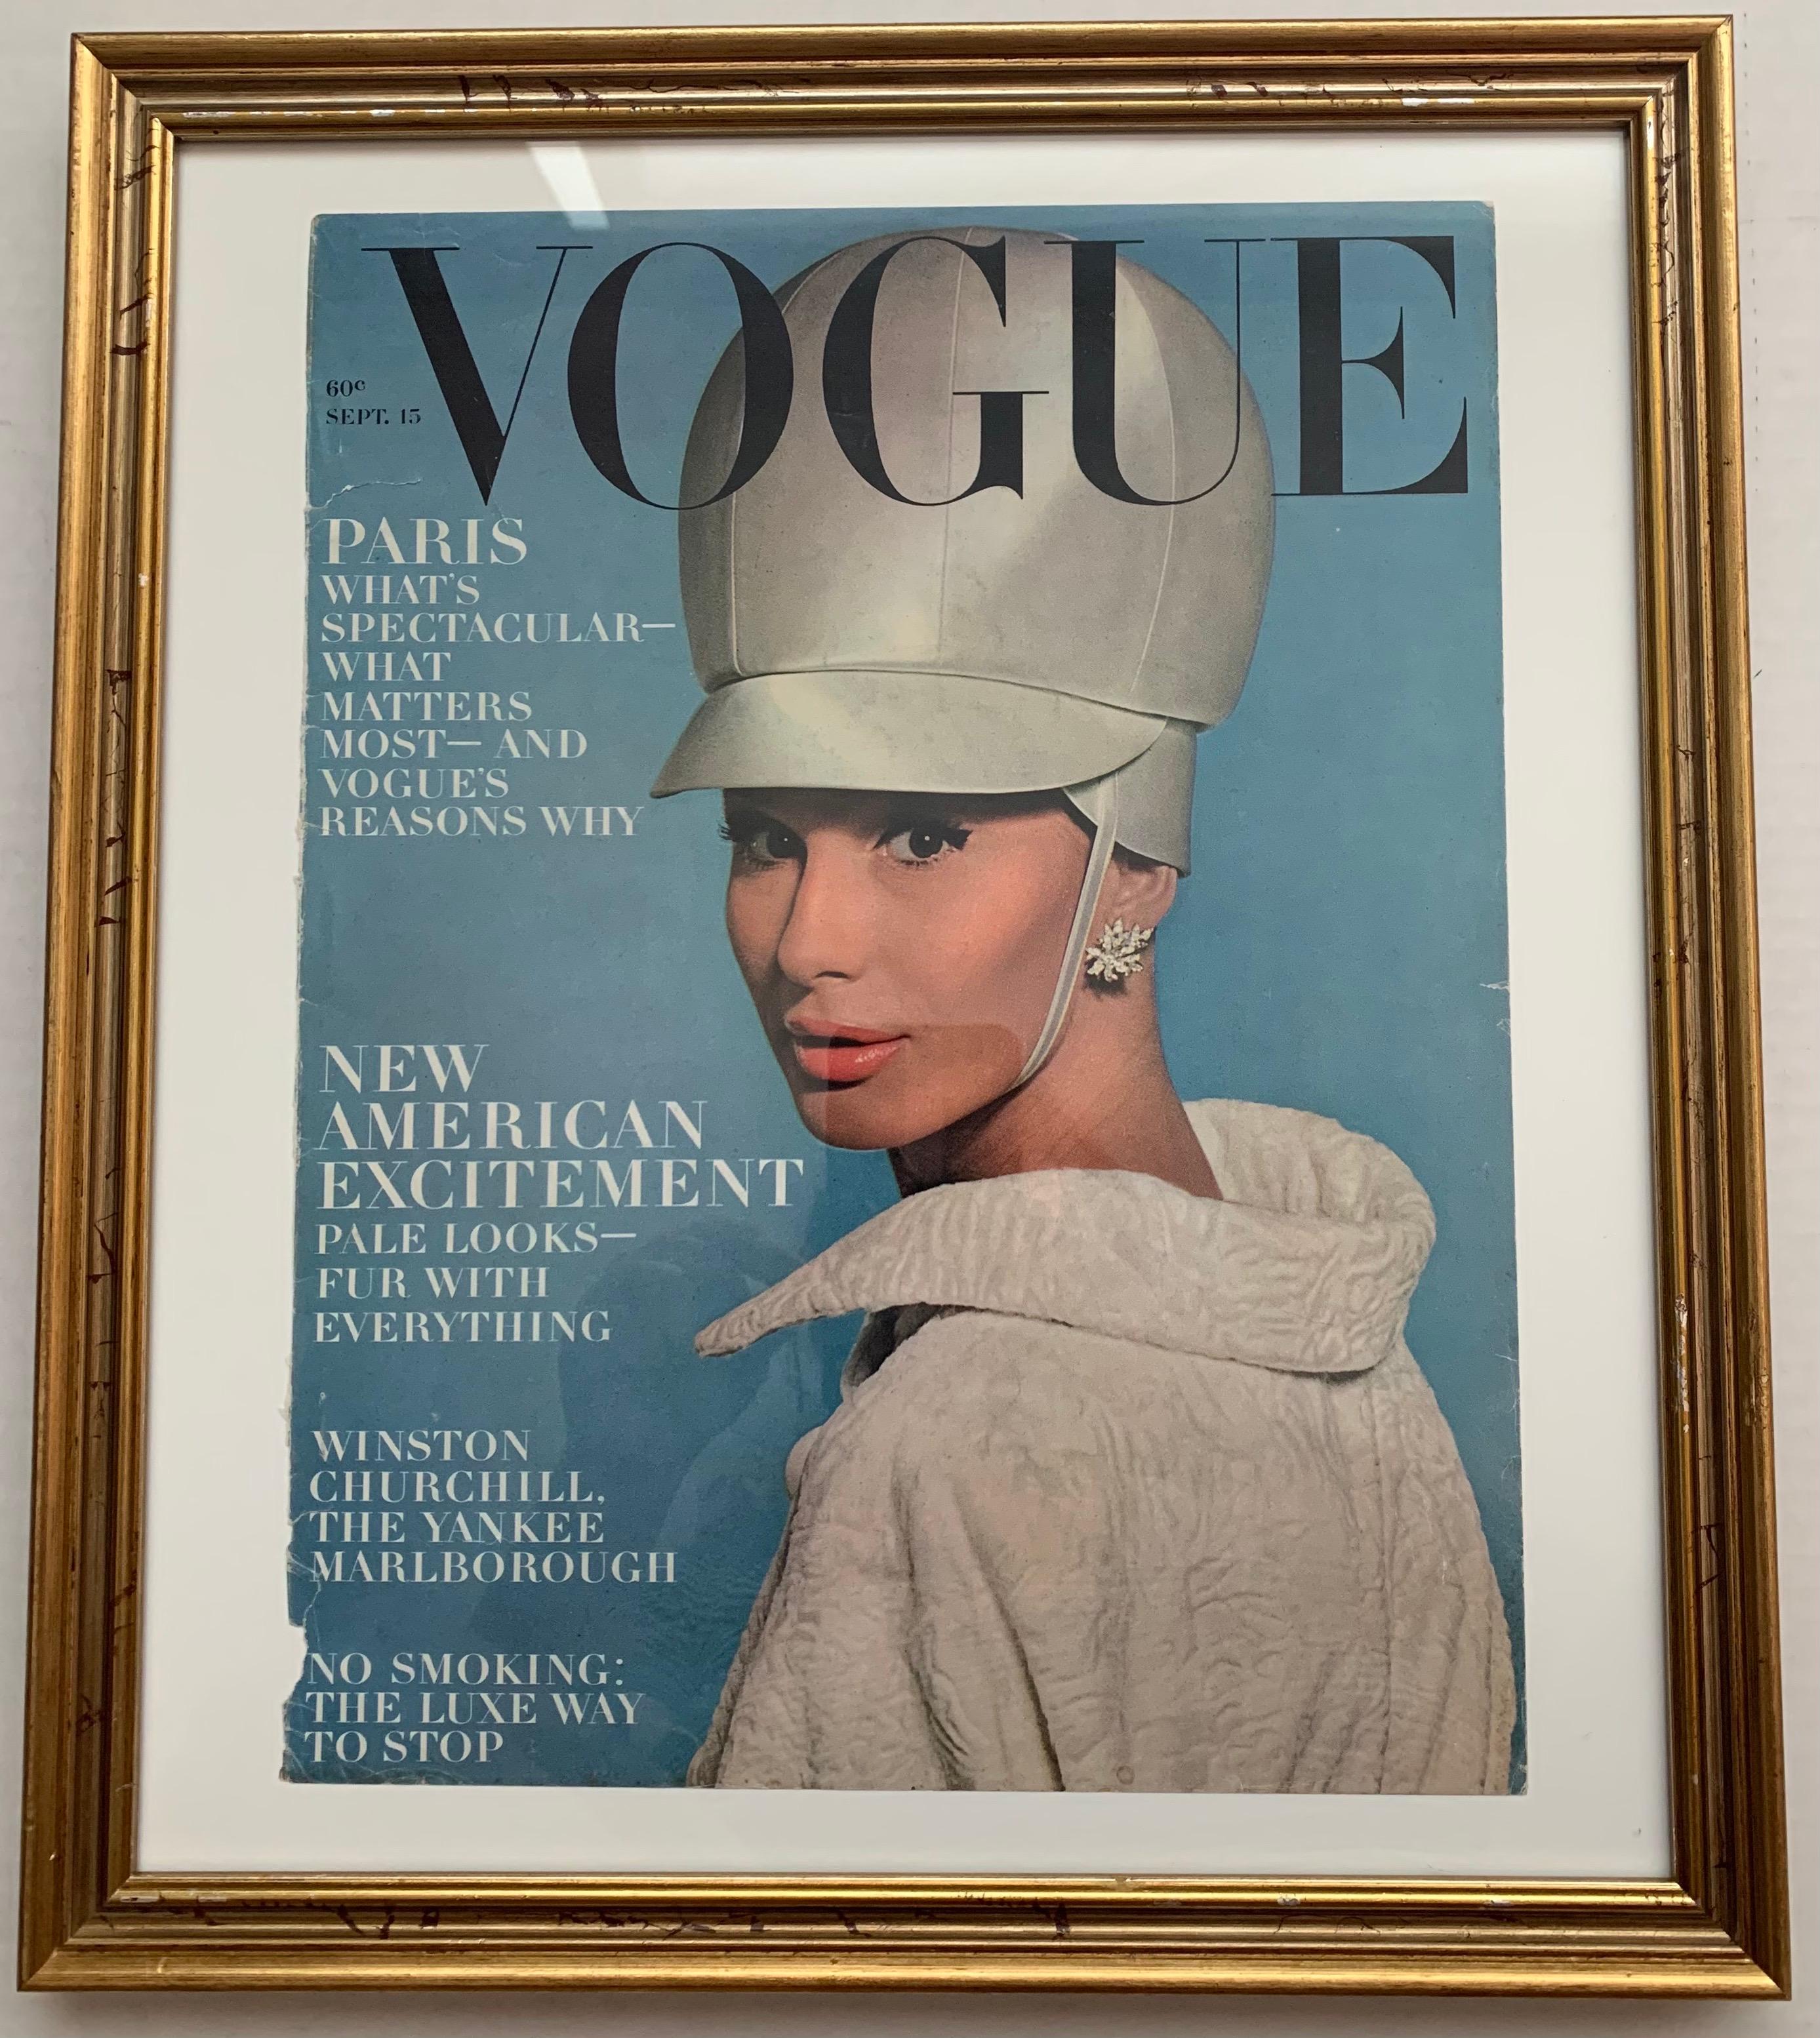 Vogue September 1963 framed original cover. Model Brigitte Bauer photographed by David Bailey. As found framed condition in gold wood frame.